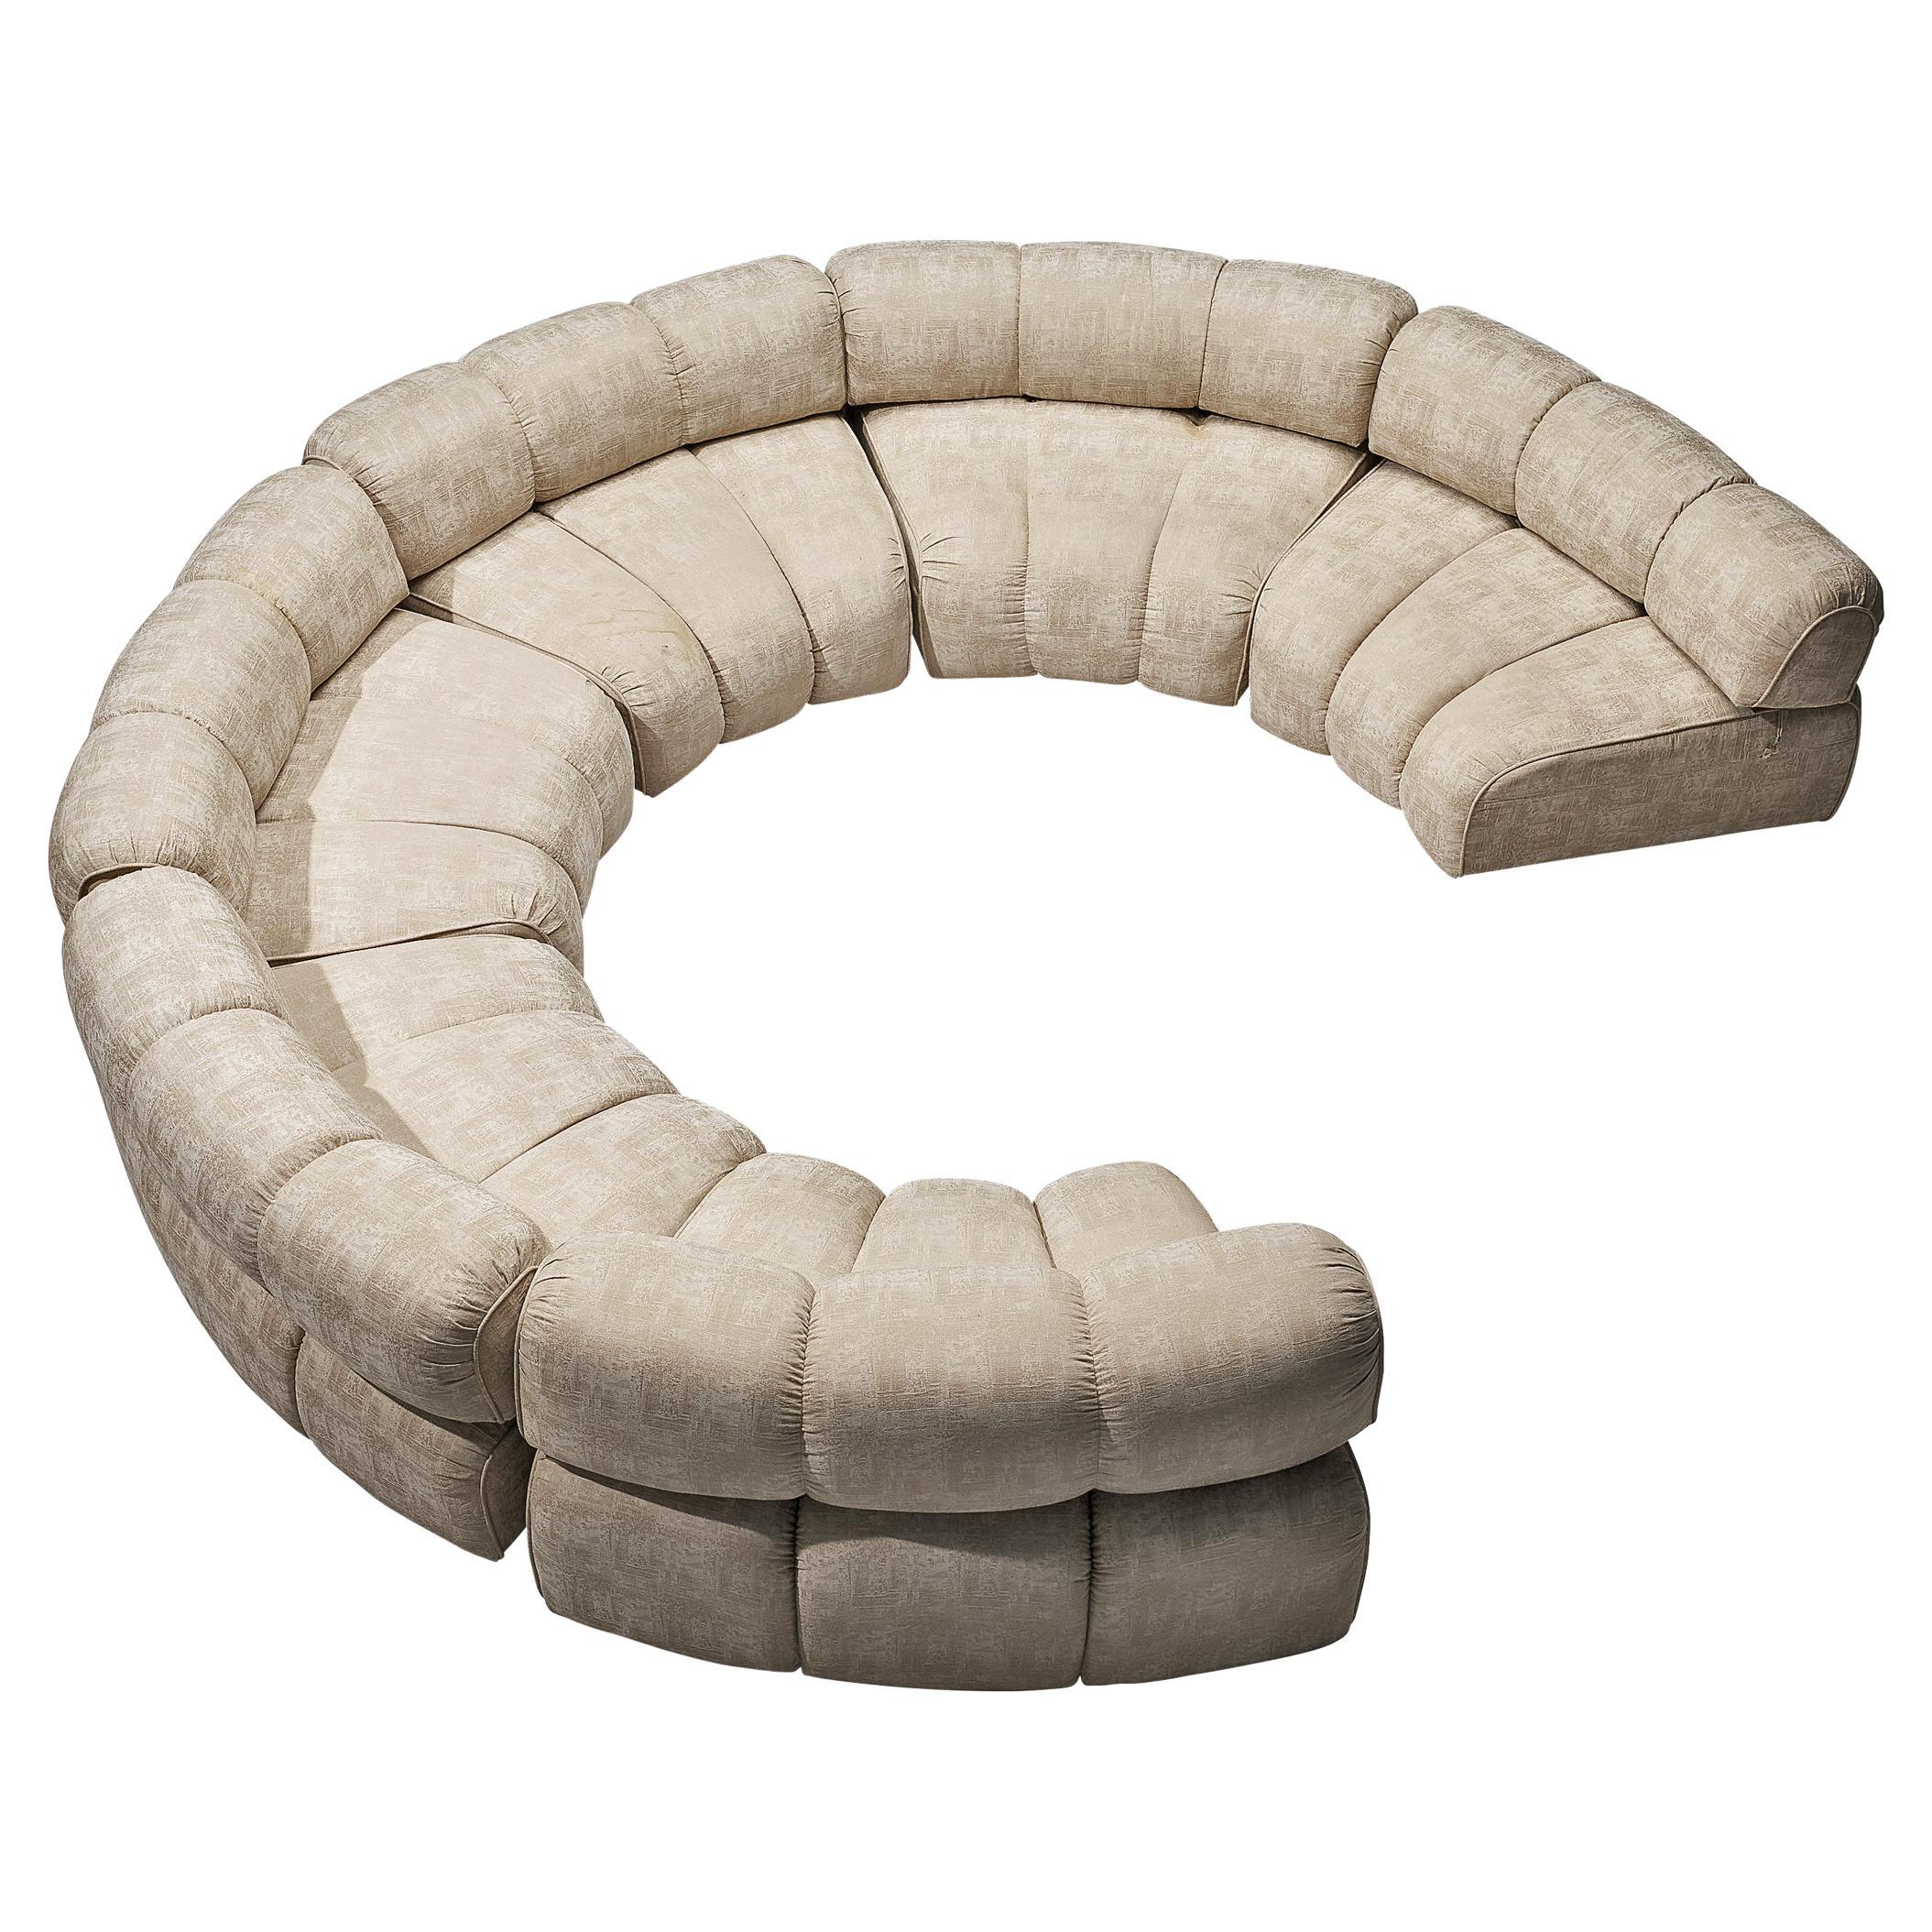 Modular 'Caterpillar' Sofa in Cream Upholstery